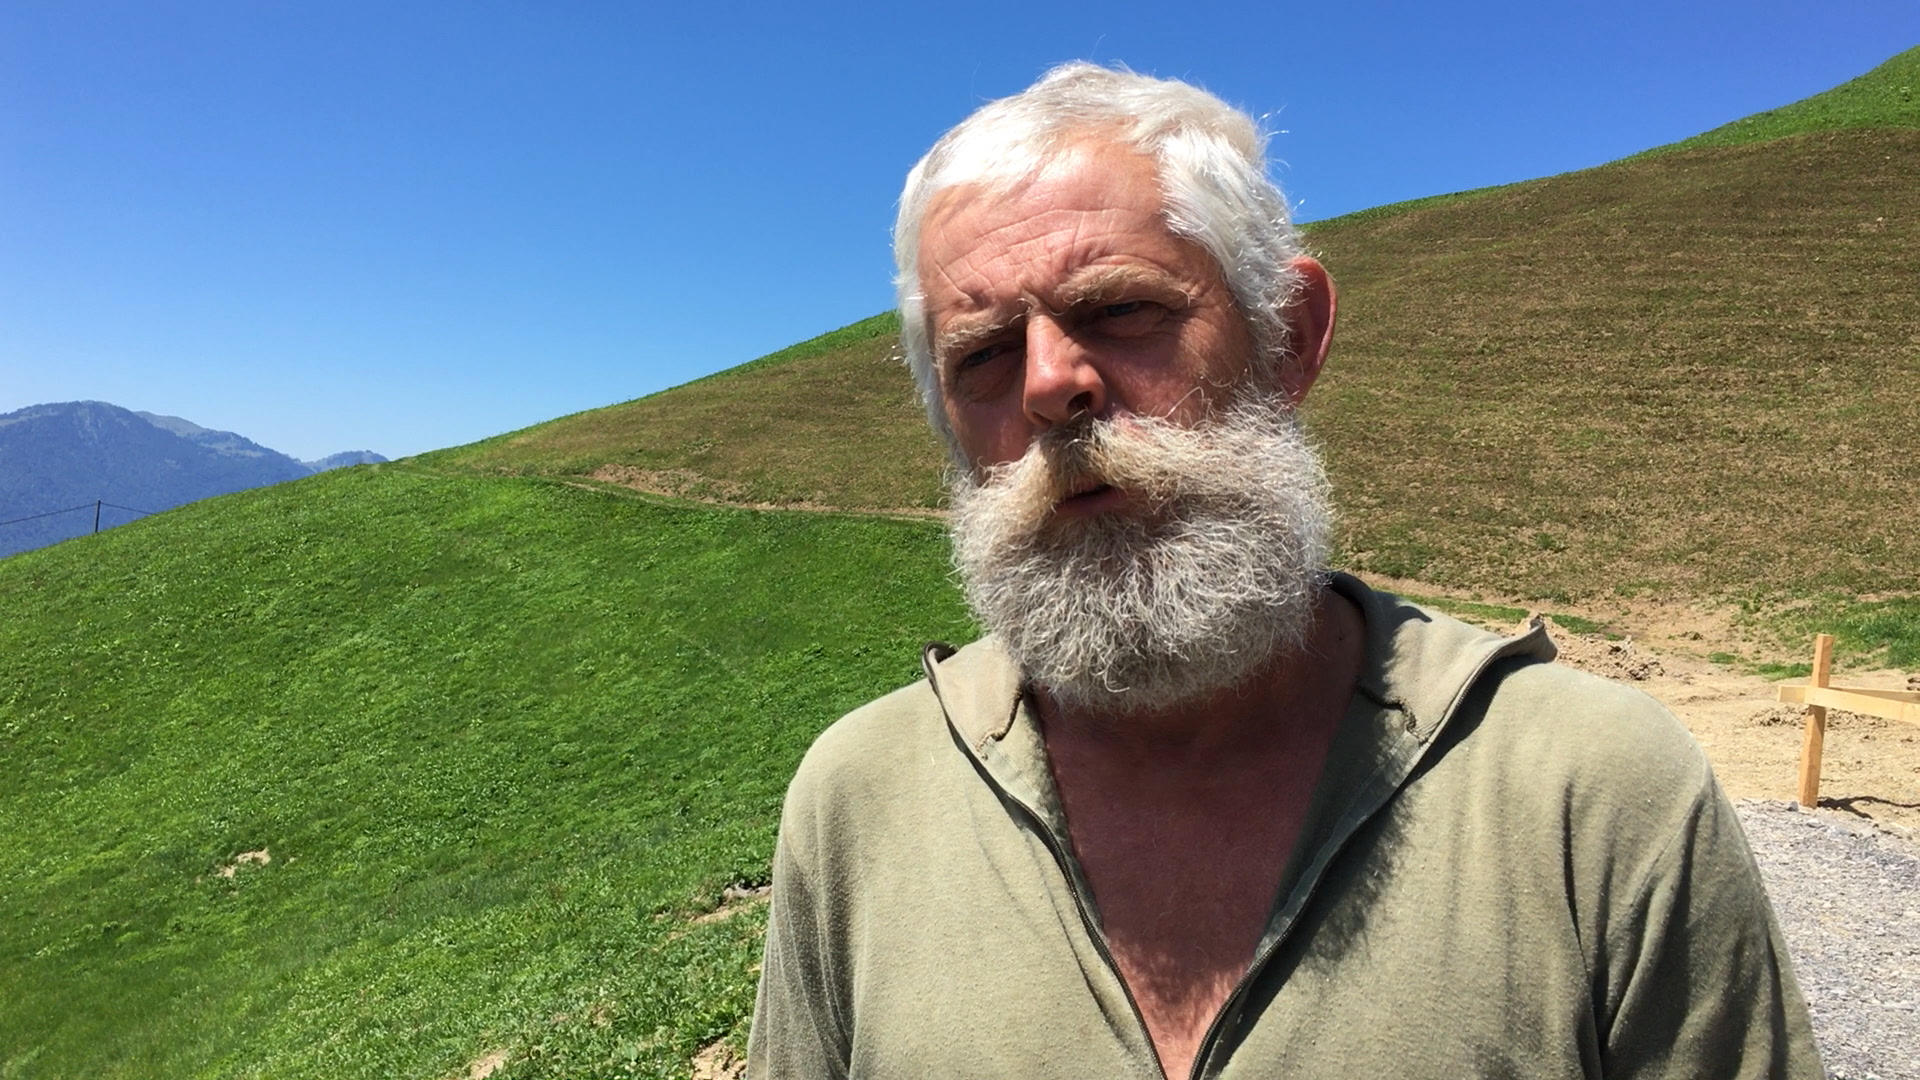 Ein älterer Mann vor grünen Hügeln